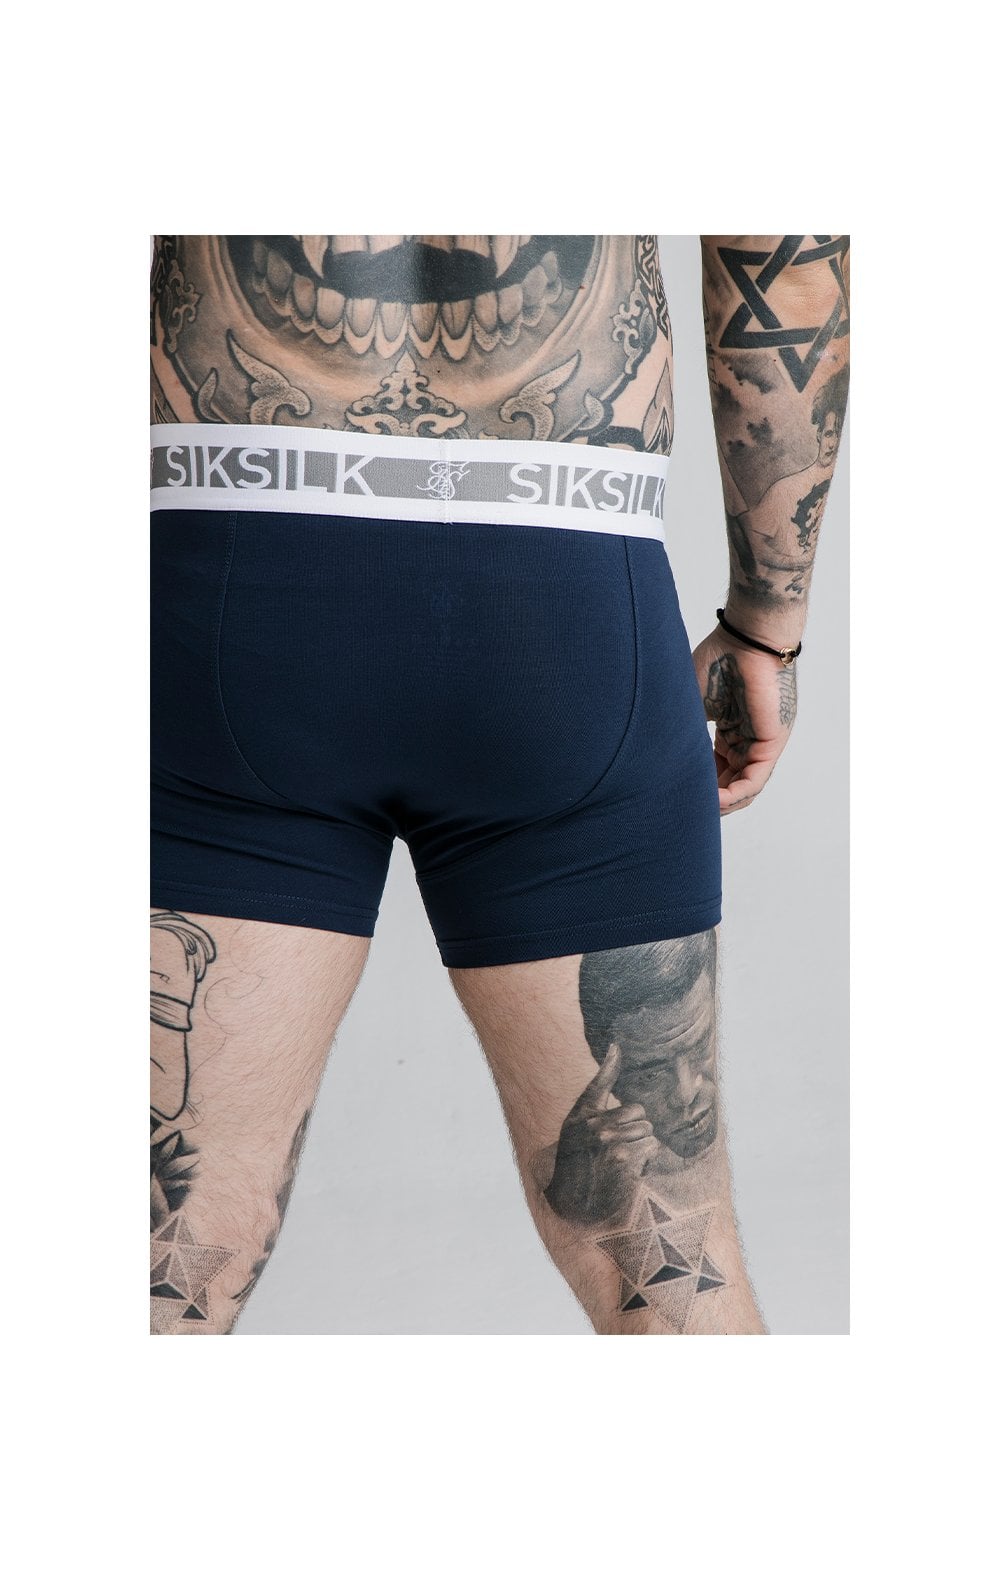 SikSilk Boxer Shorts (2 Pack) - Navy & Grey (6)